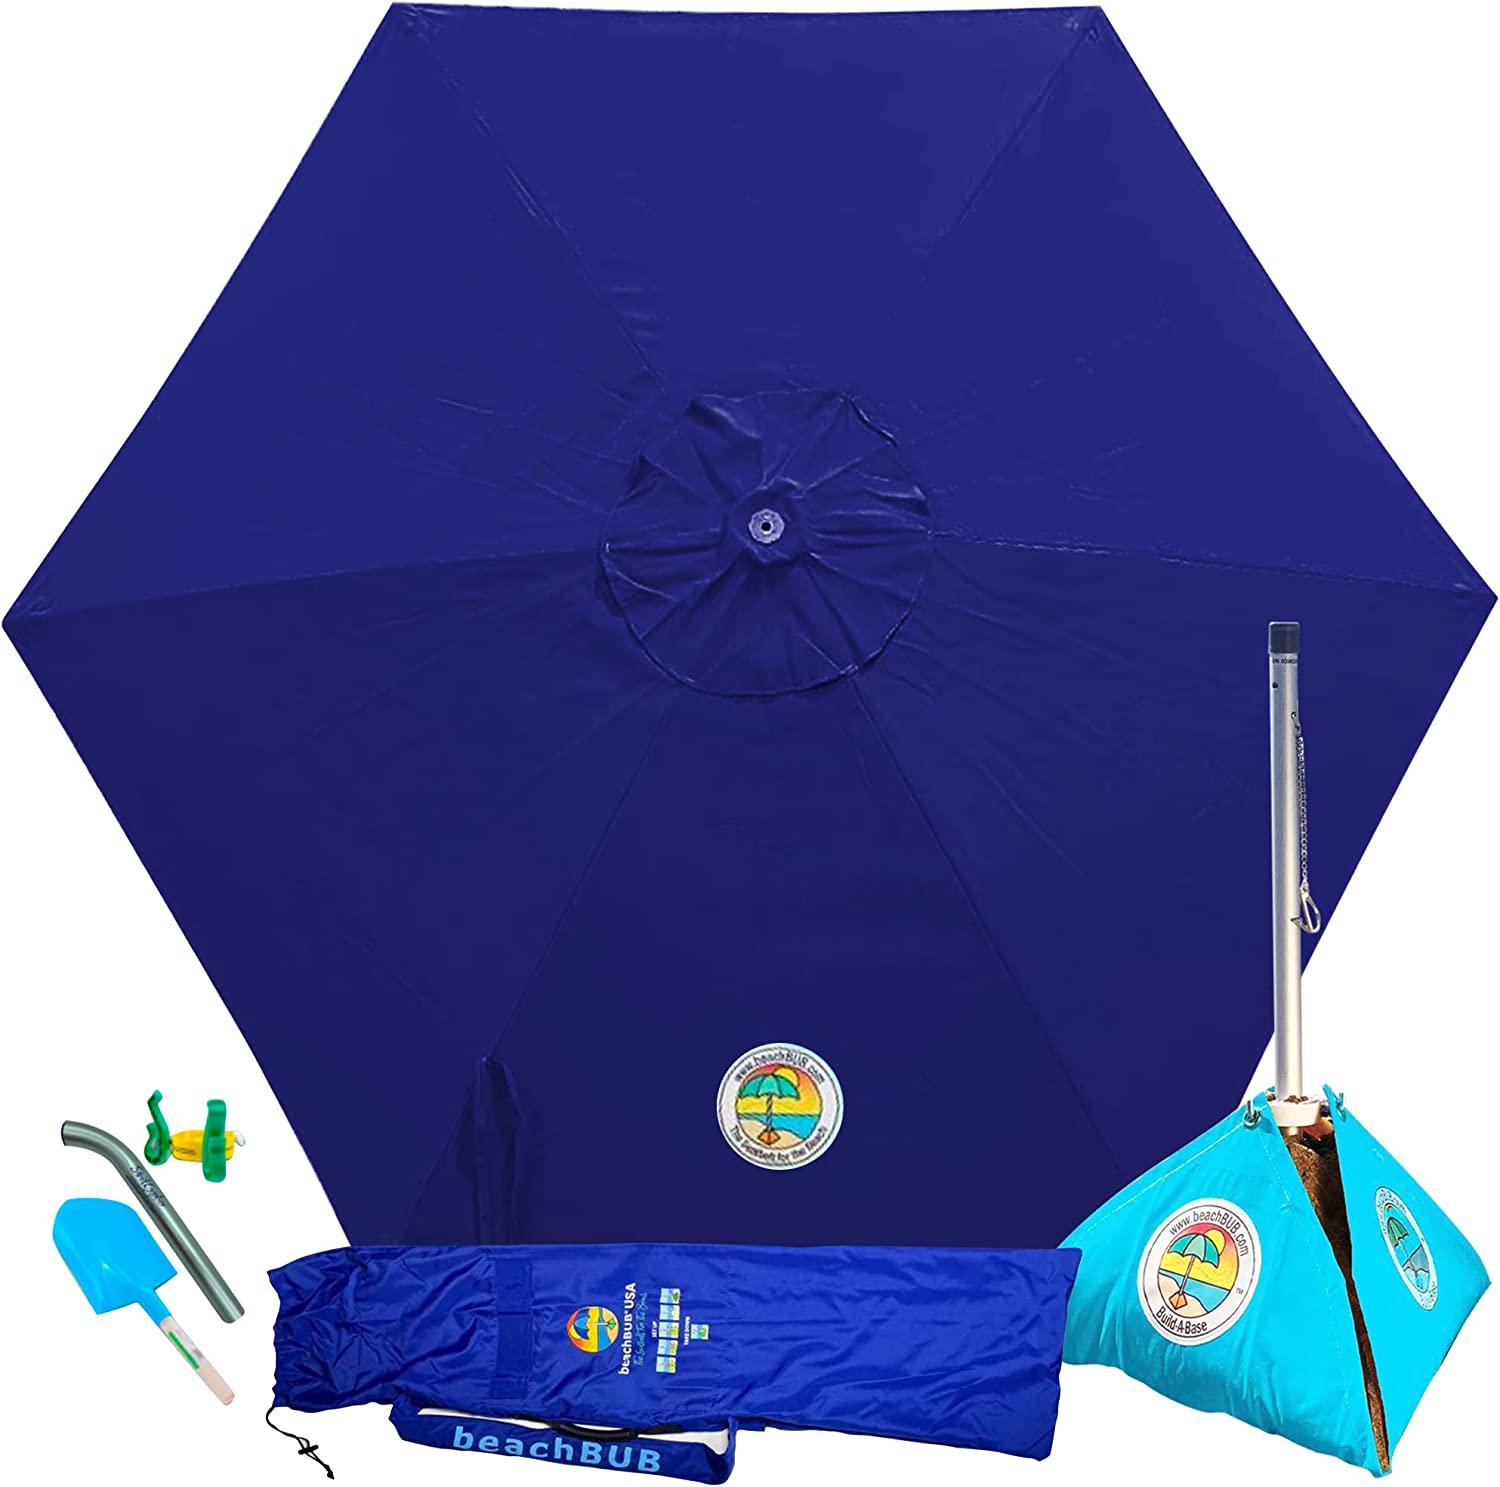 BEACHBUB All-In-One Beach Umbrella System. Includes [...]